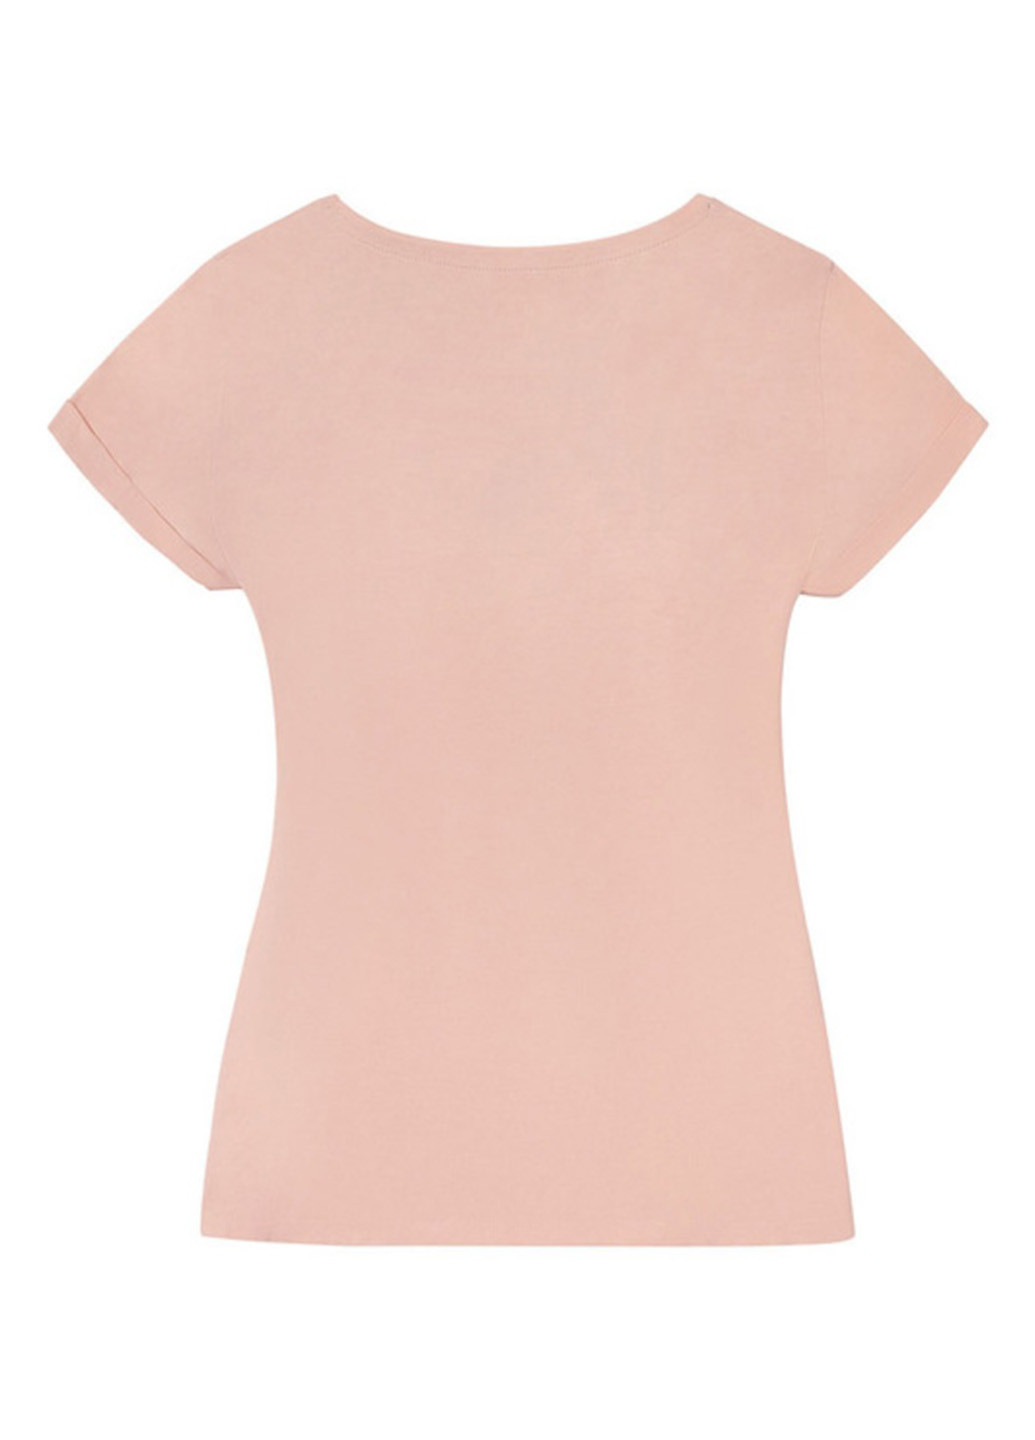 Светло-розовая летняя футболка с коротким рукавом Esmara